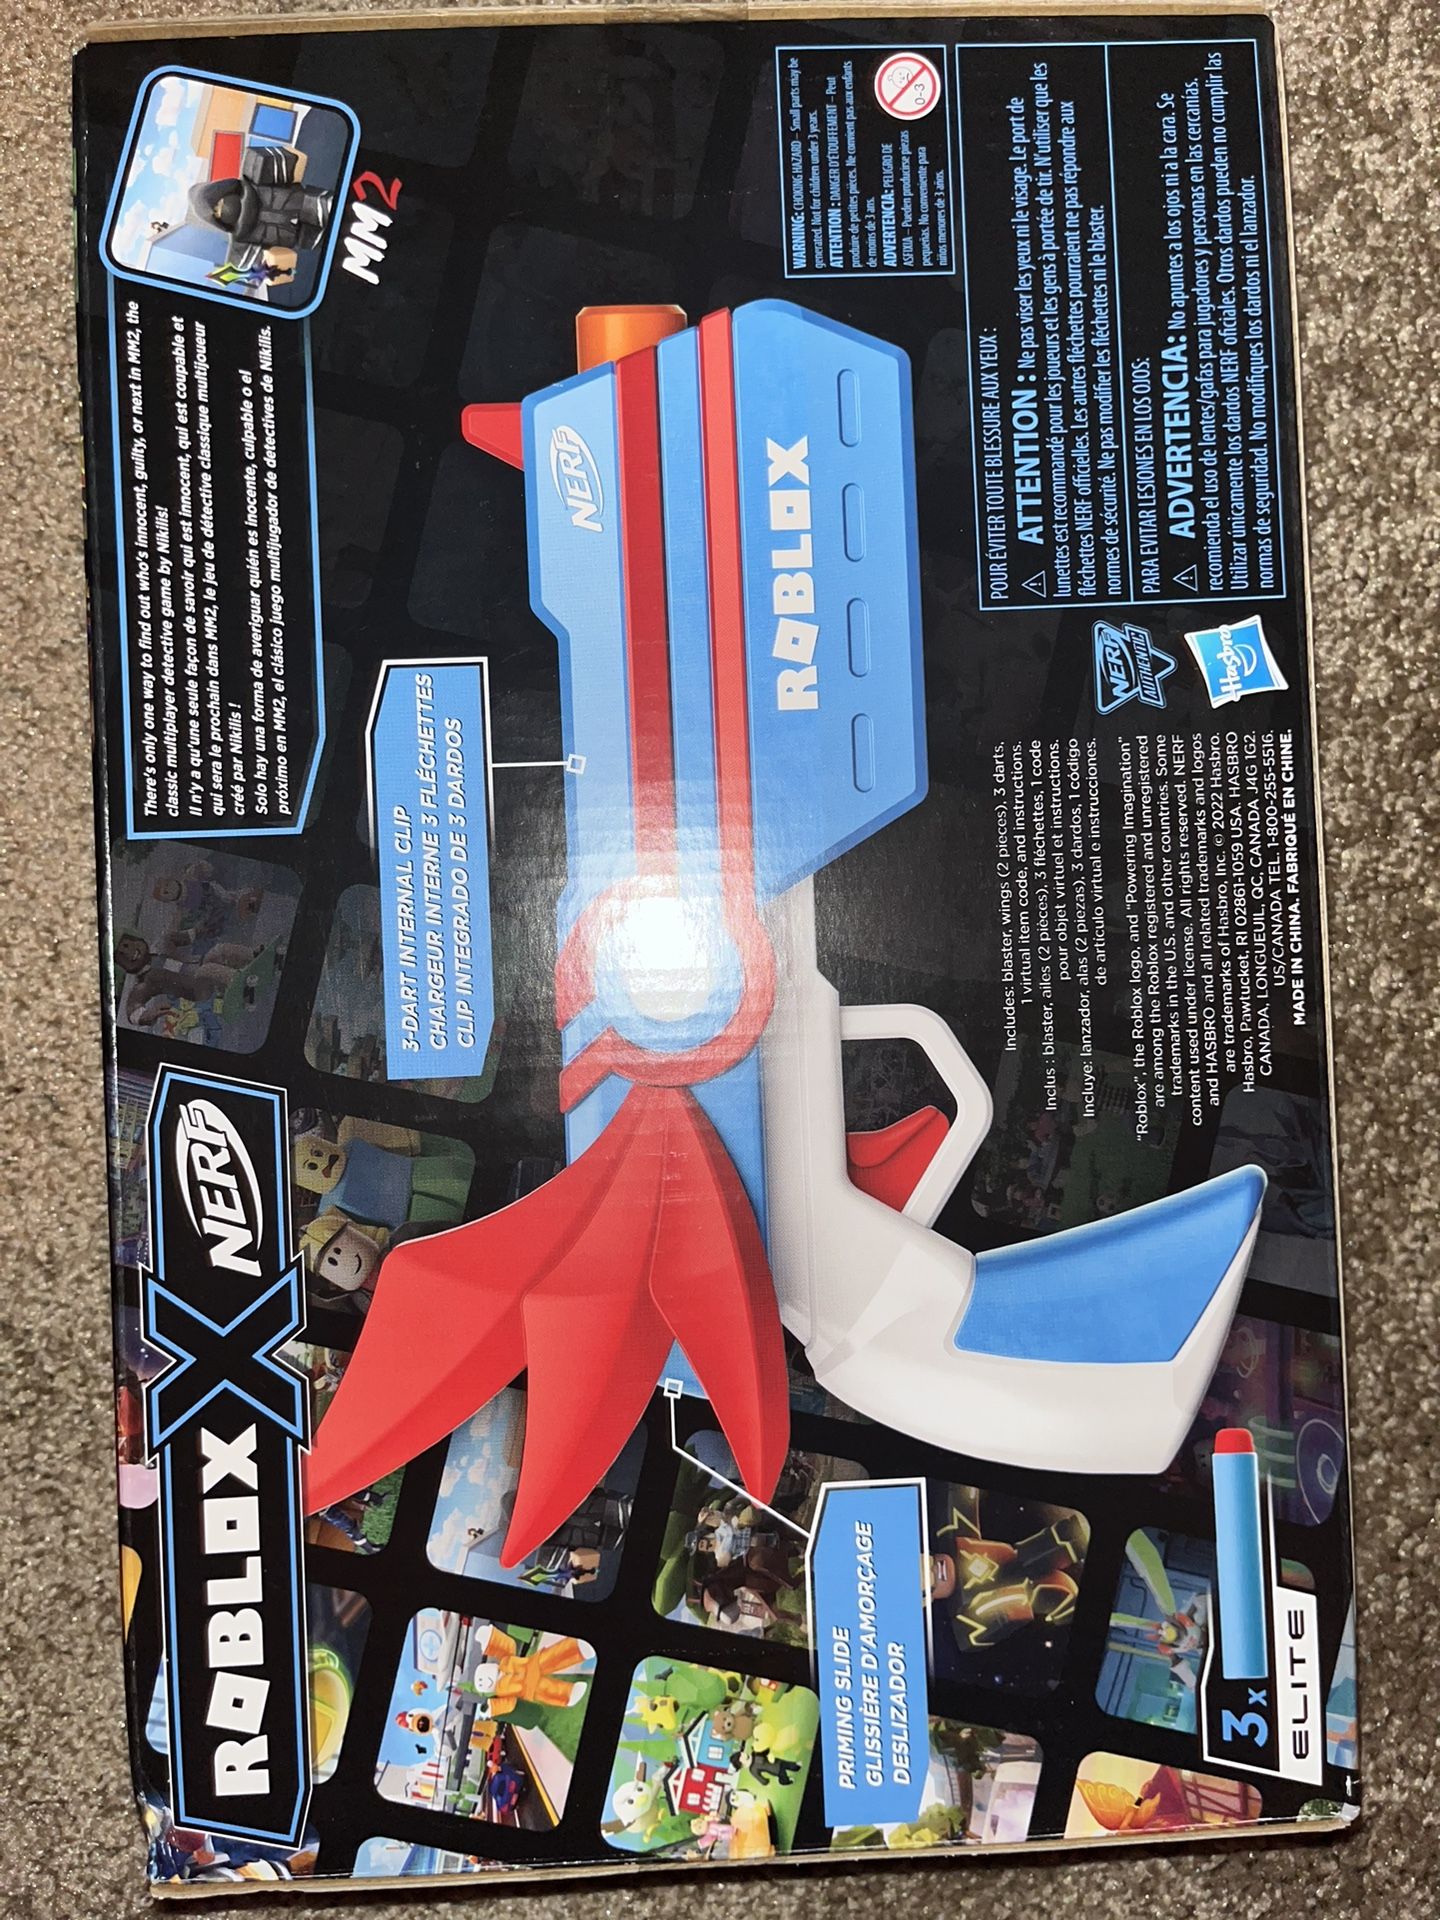 Roblox Foam Dart Blaster - Kids Outdoor Play (Exclusive Virtual Item  Included) (MM2: Dartbringer) : Toys & Games 